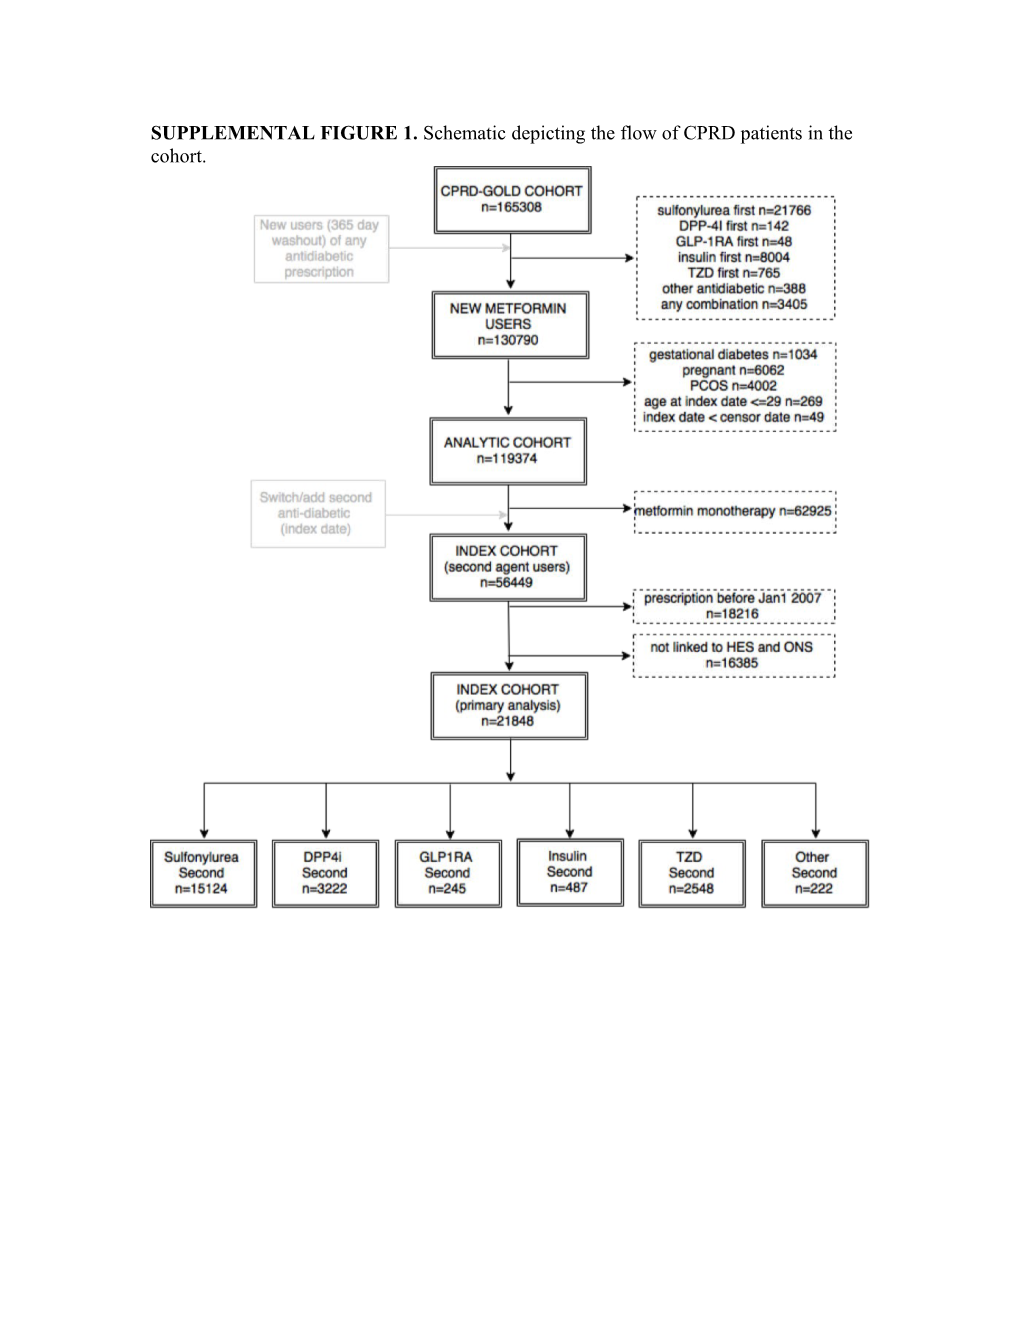 SUPPLEMENTAL FIGURE 1. Schematic Depicting the Flow of CPRD Patients in the Cohort